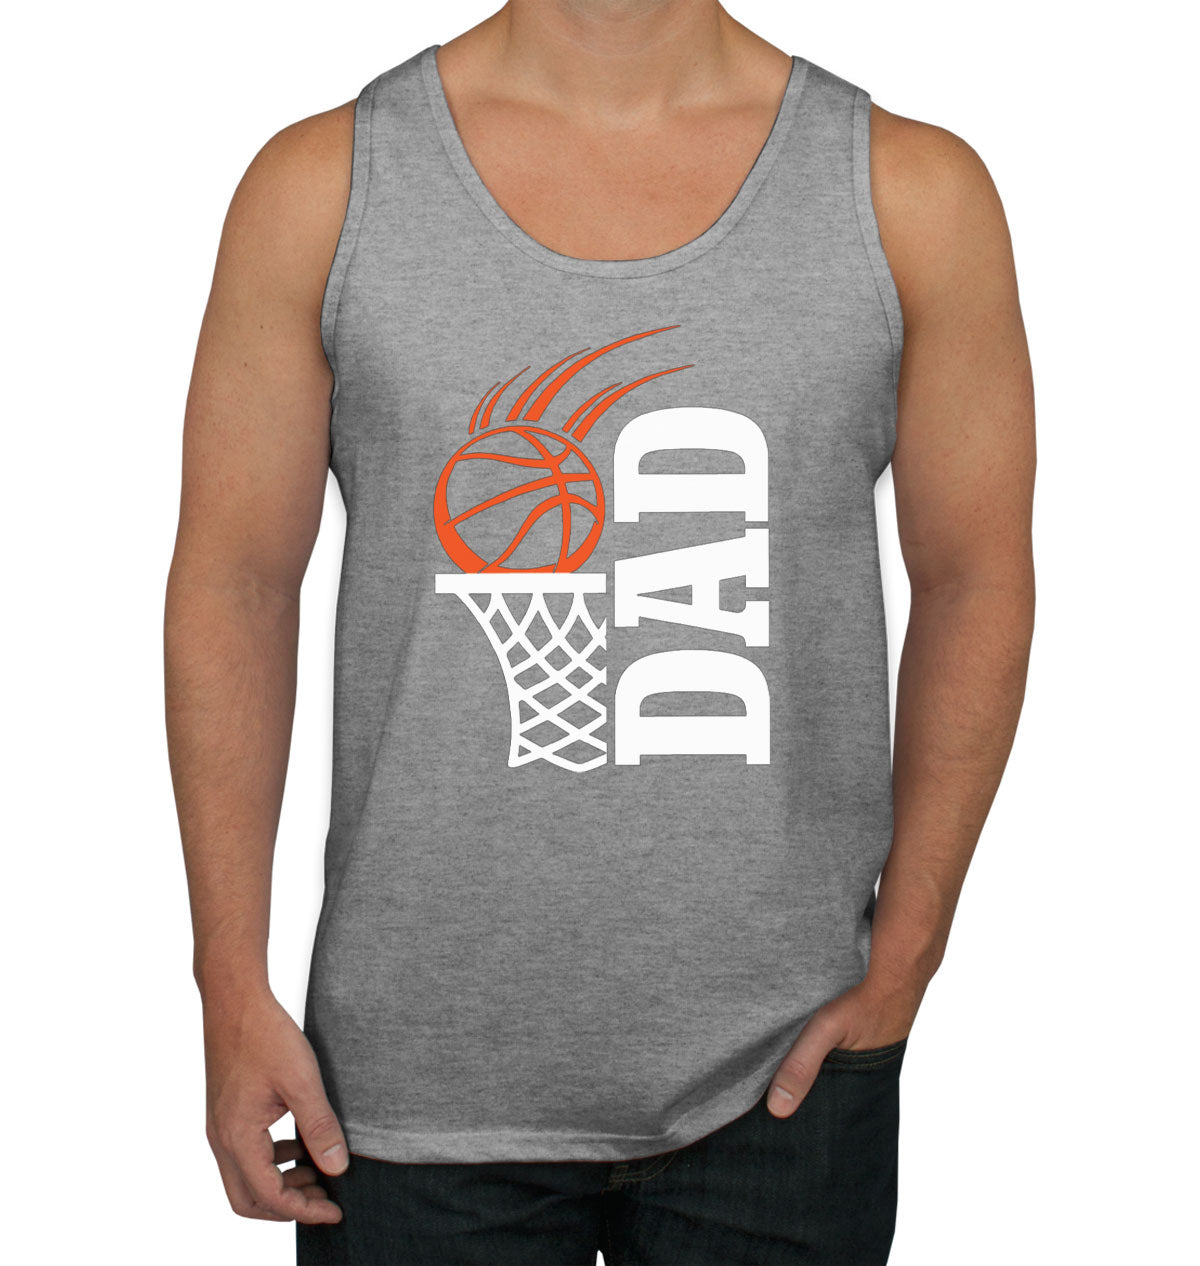 Basketball Dad Men's Tank Top